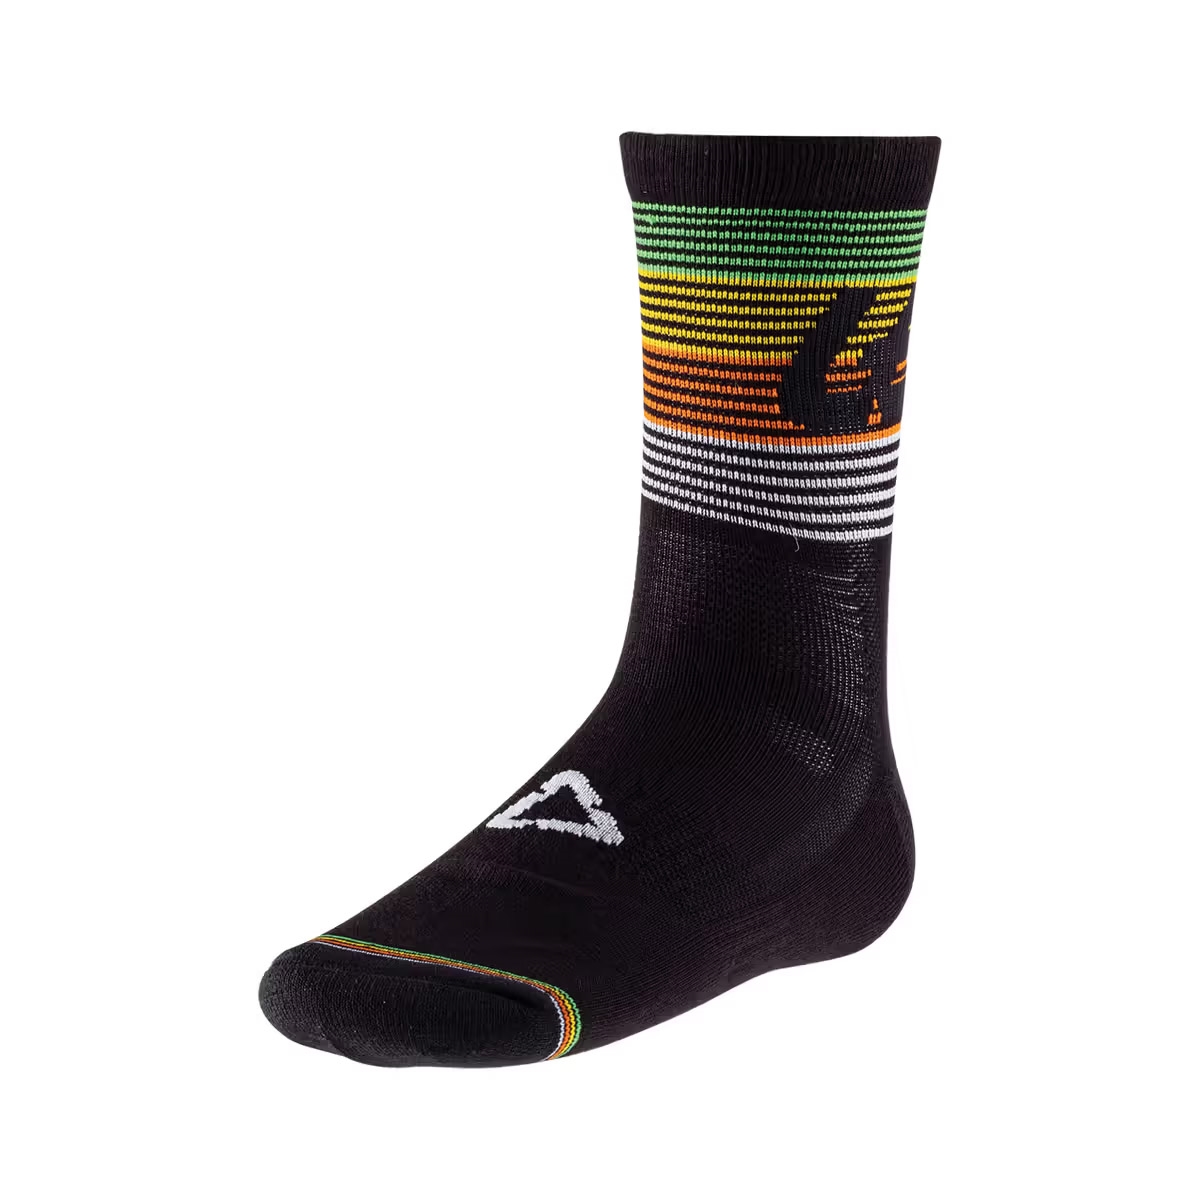 Reinforced Mtb Socks Black Size S/M (38-42)